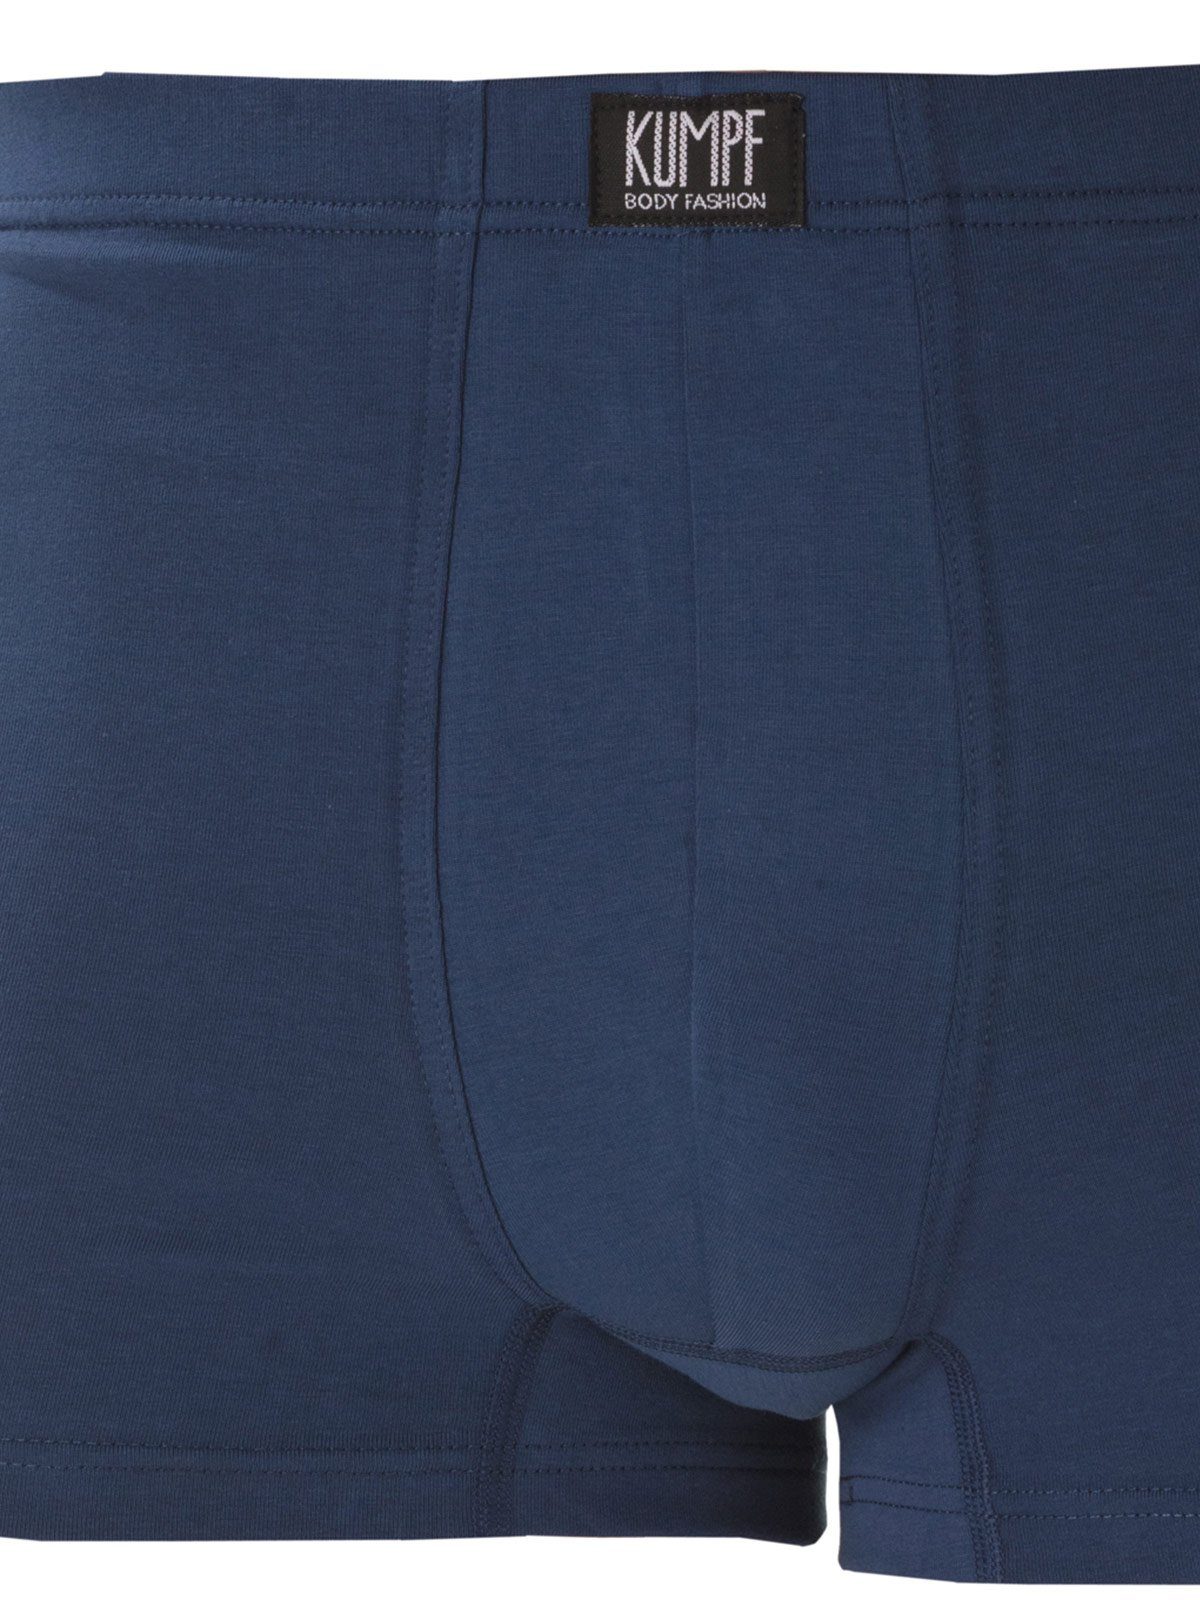 KUMPF Retro Pants Herren Pants 1-St) Markenqualität darkblue Cotton hohe (Stück, Bio